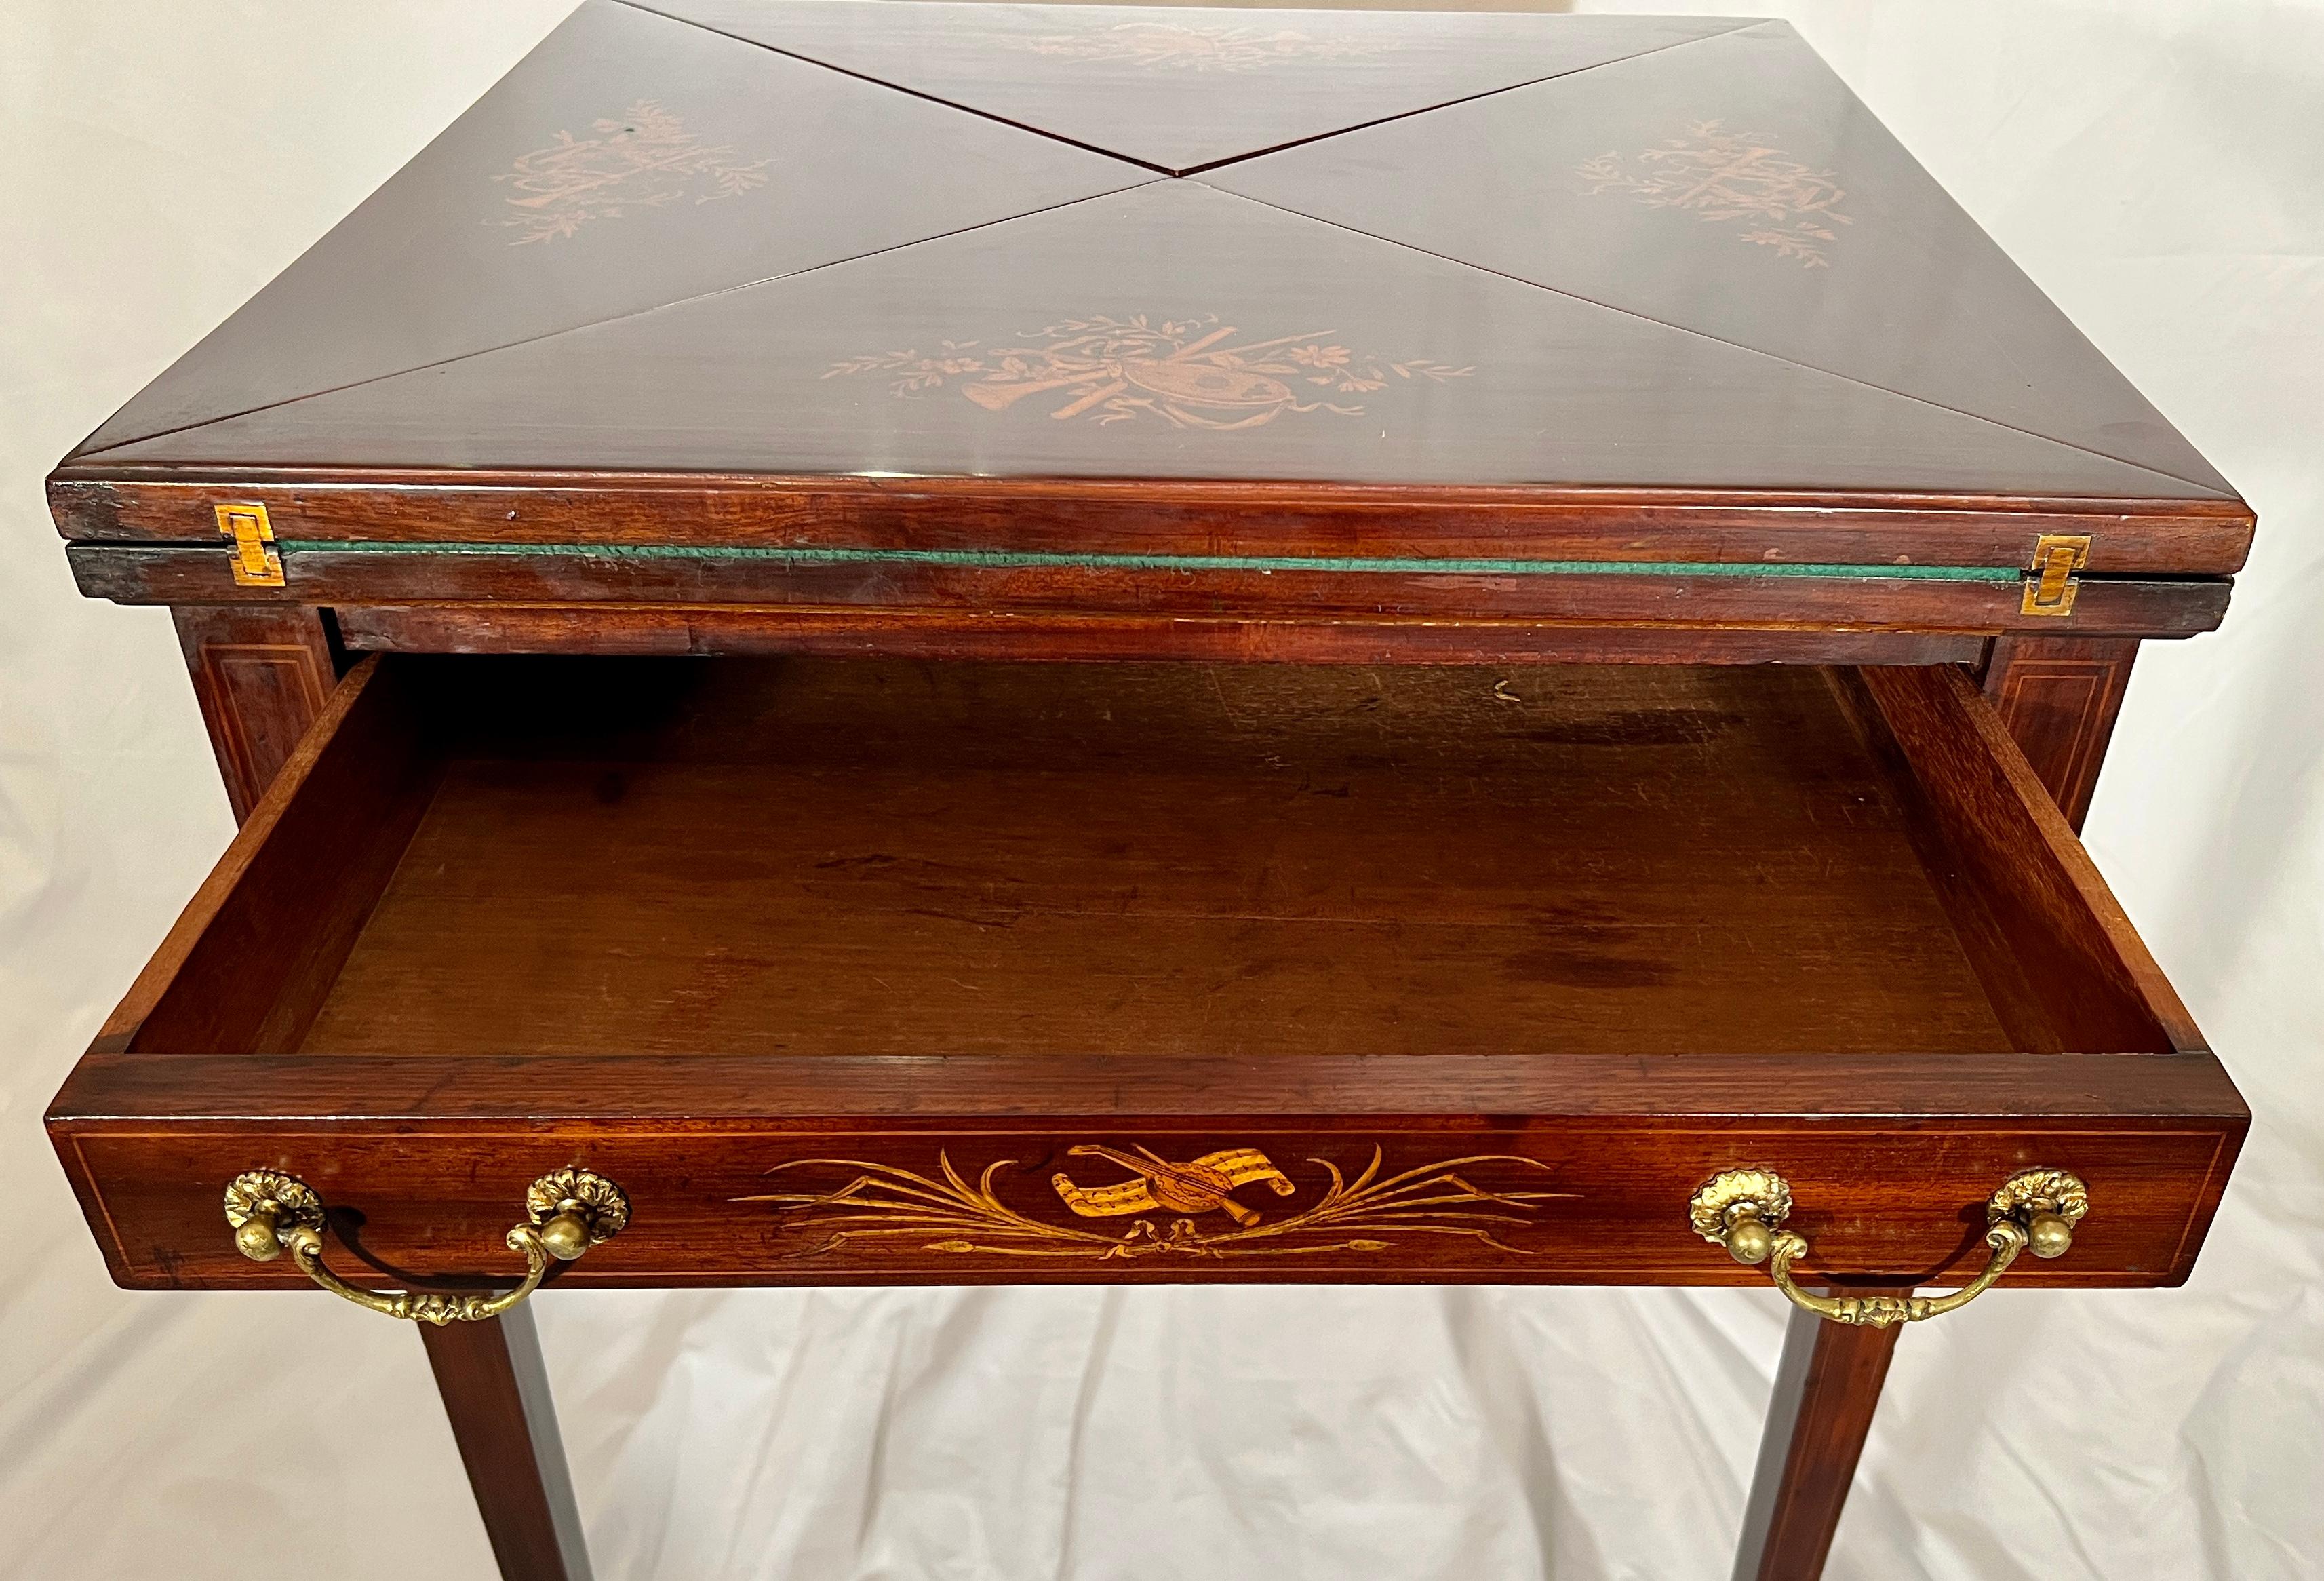 Antique English Mahogany Handkerchief Table circa 1880
Table Open:
Width: 33.5